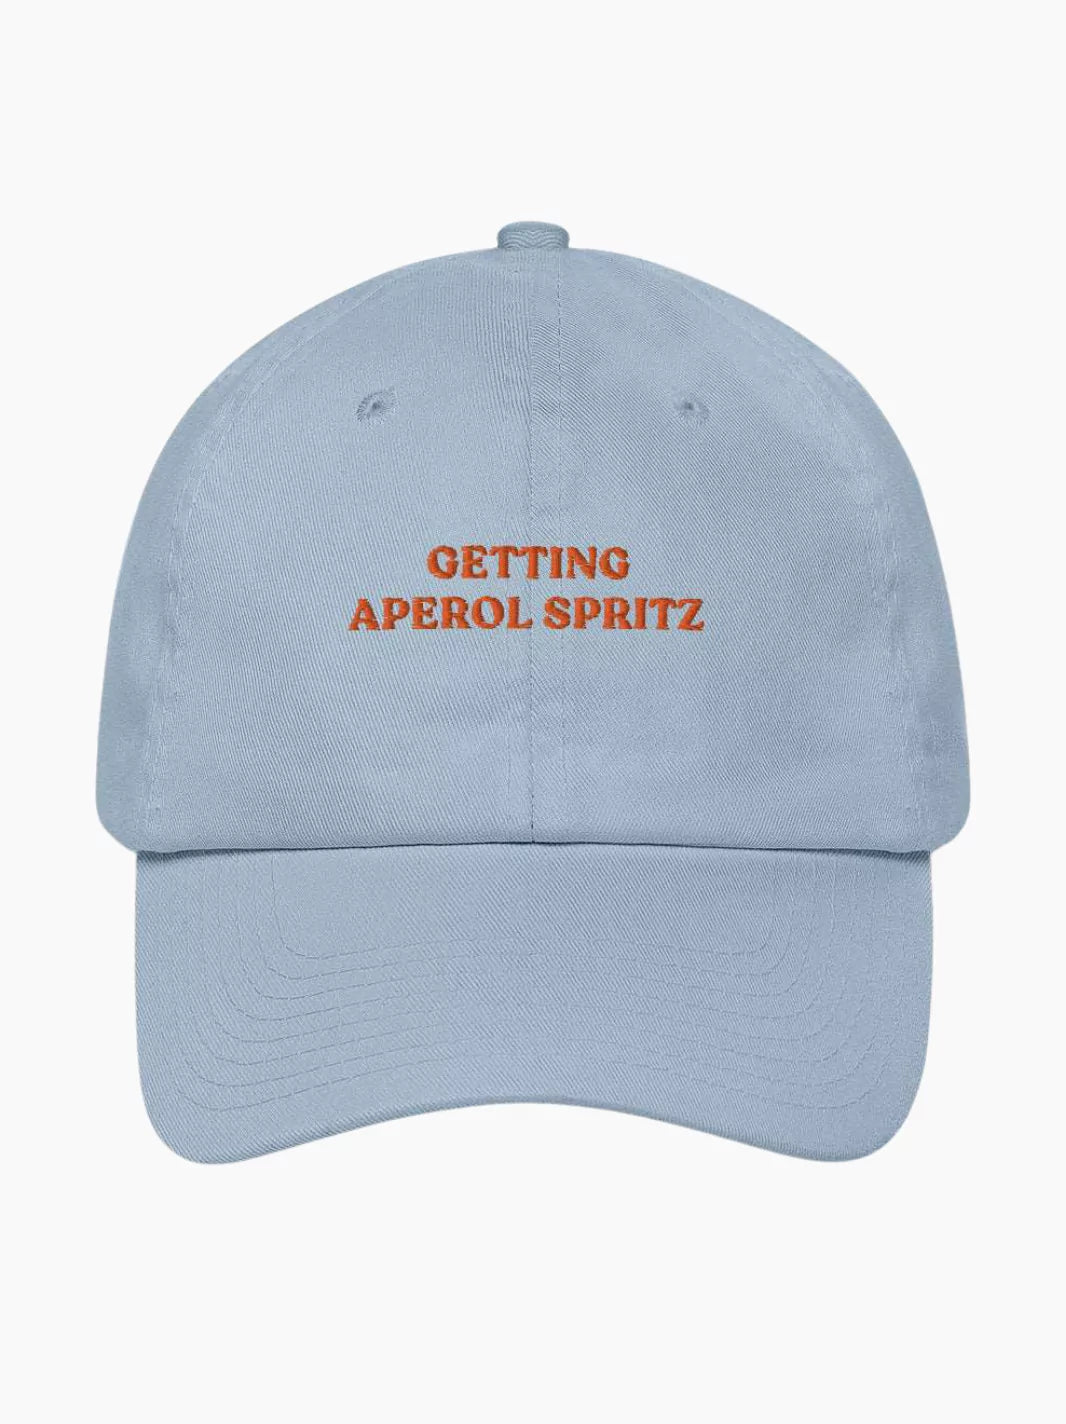 Getting Aperol Spritz Cap